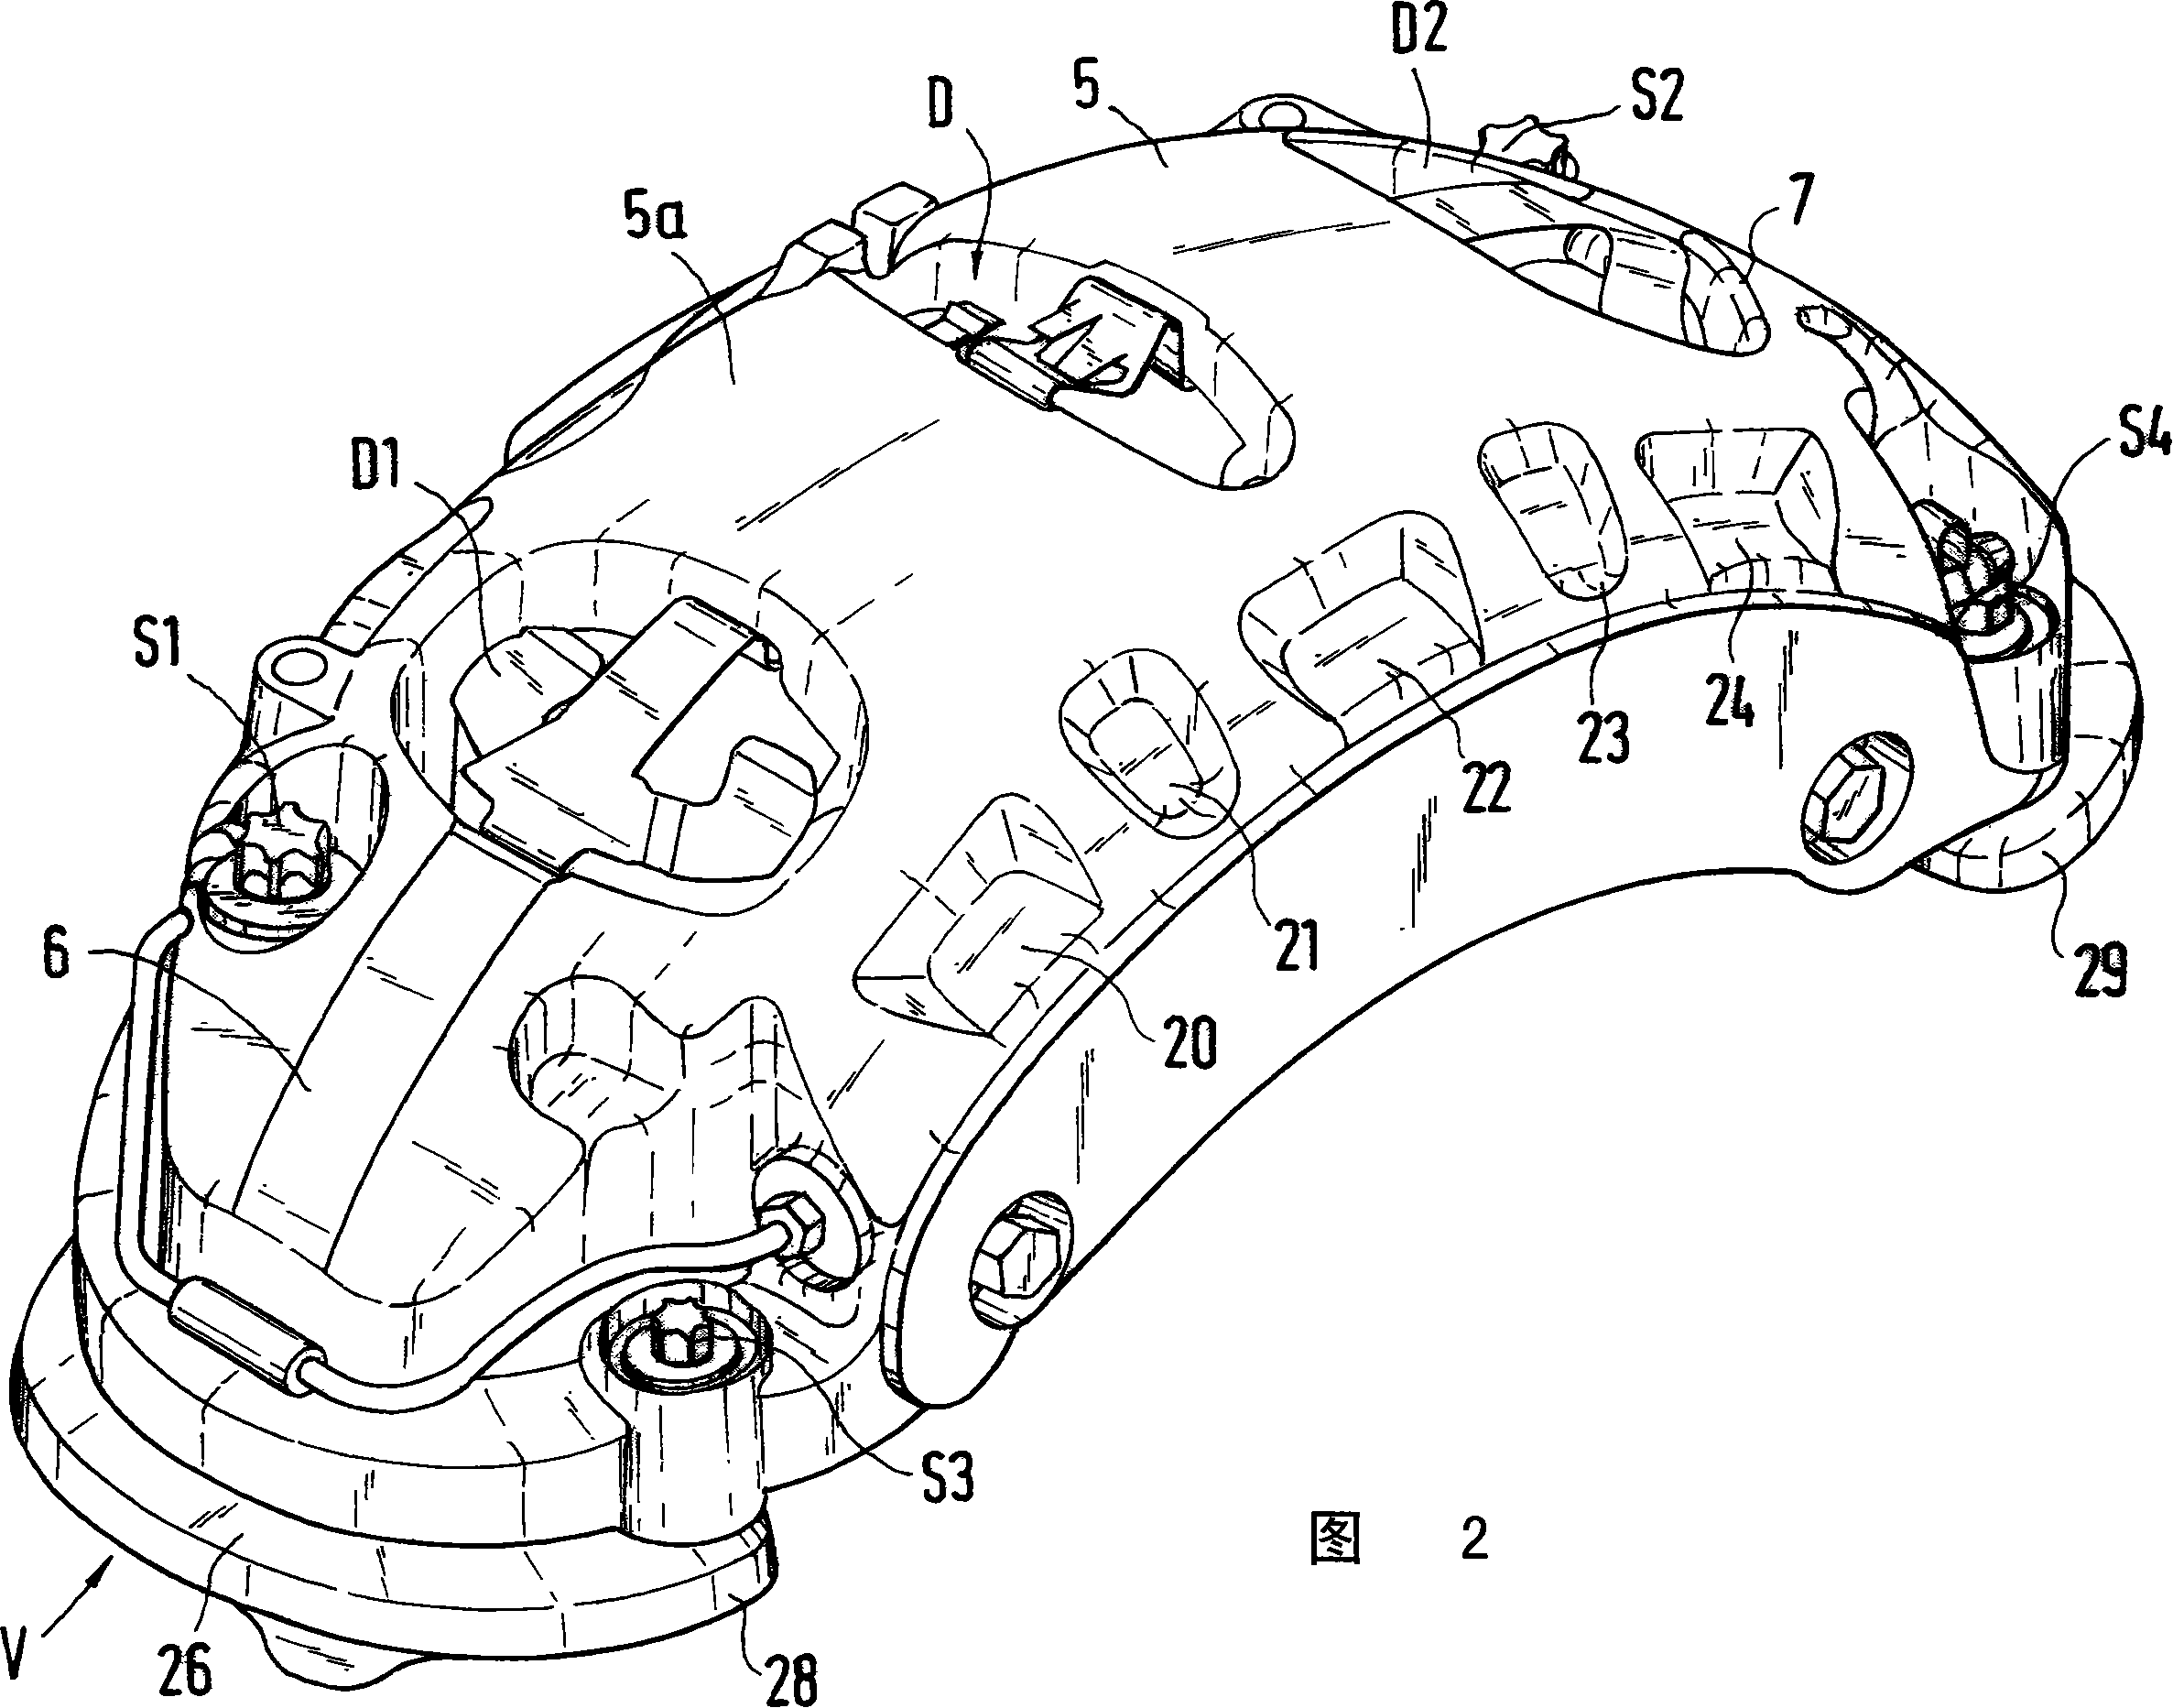 Disc brake calliper for a motor vehicle